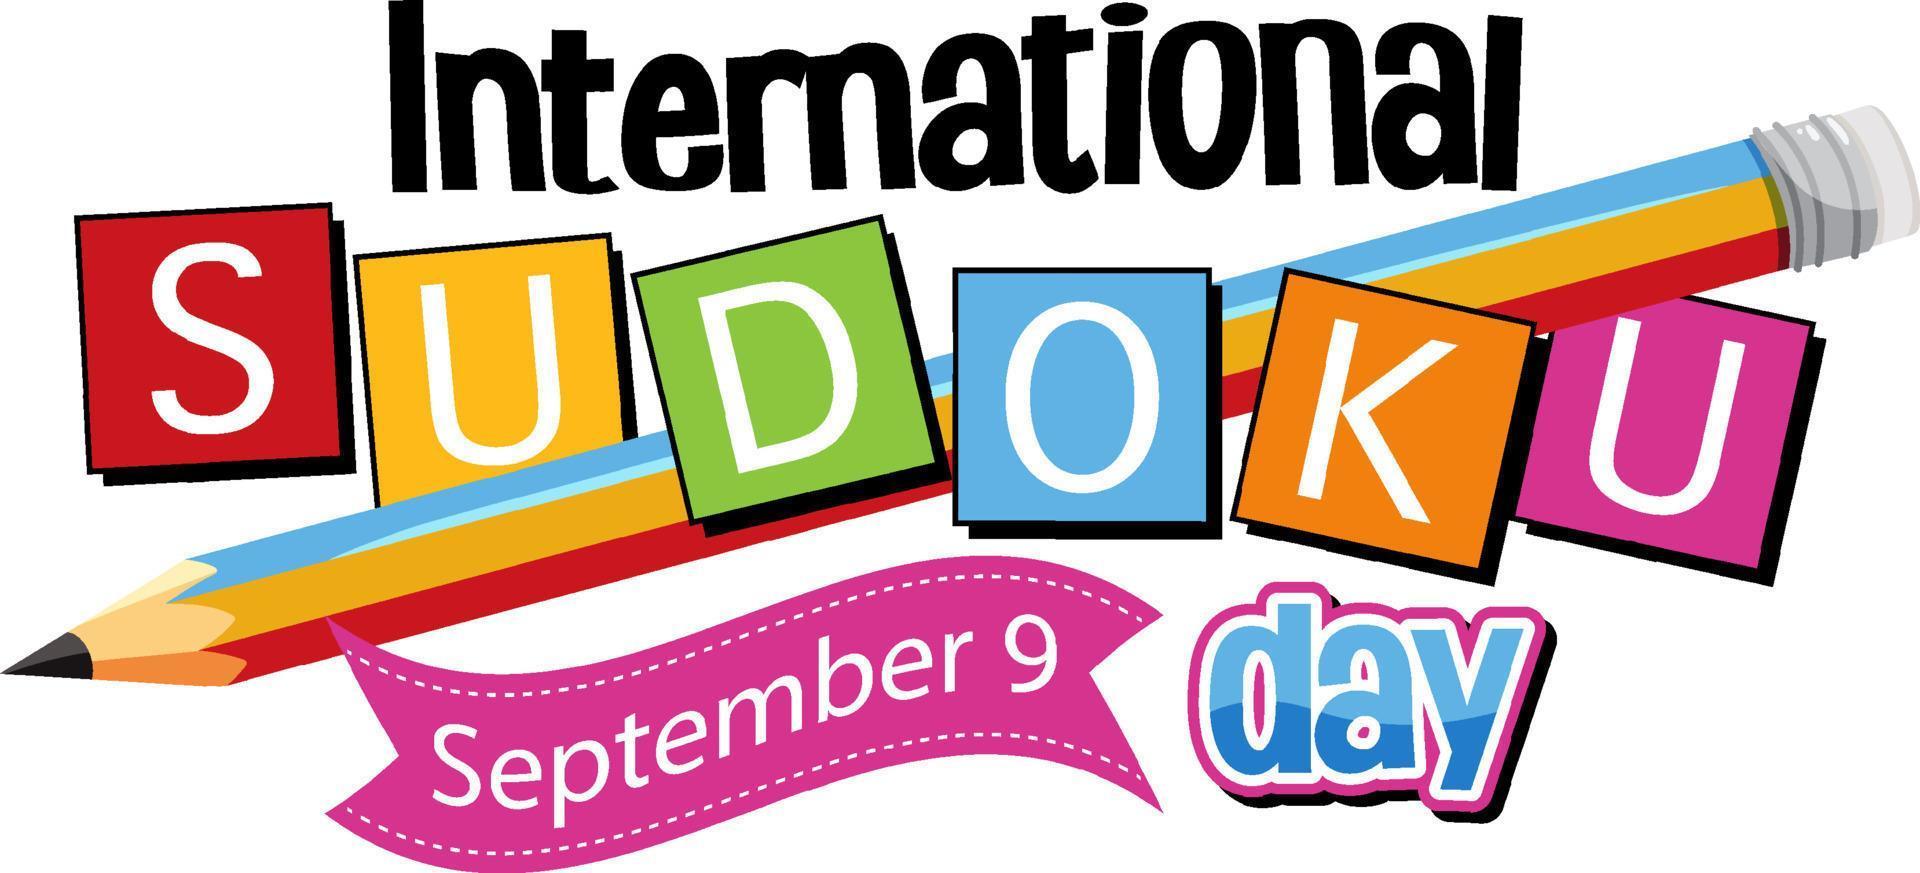 internationale sudoku dag 9 september vector